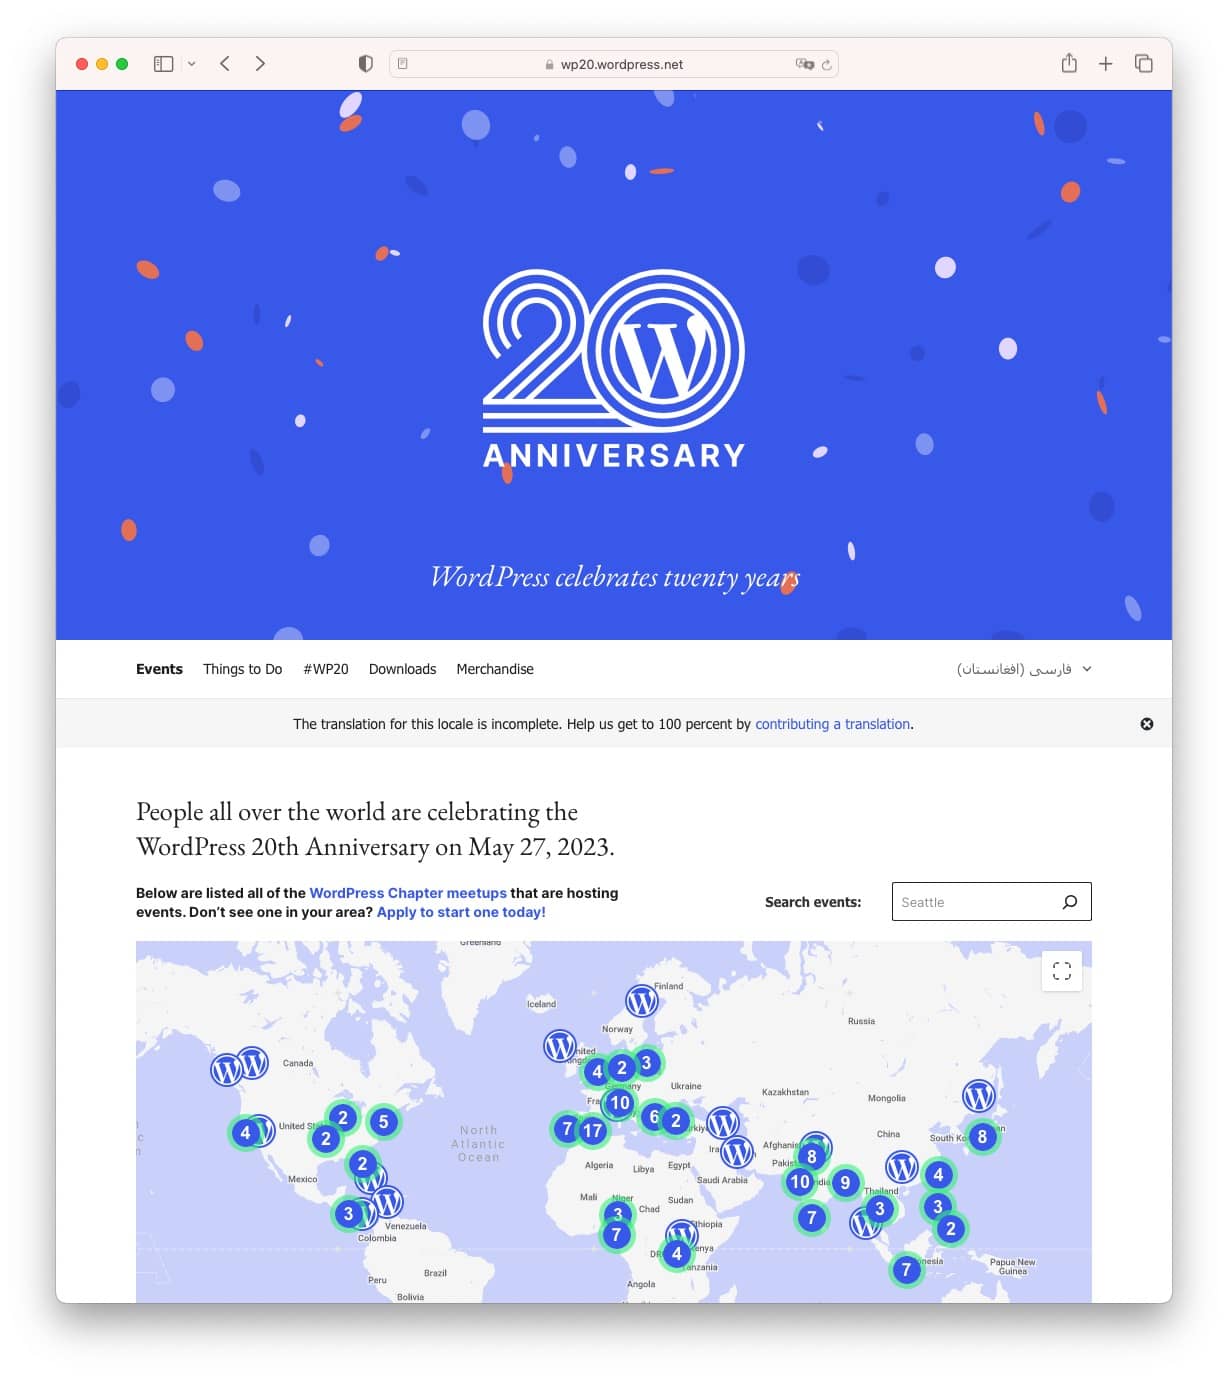 WordPress turns 20 years old